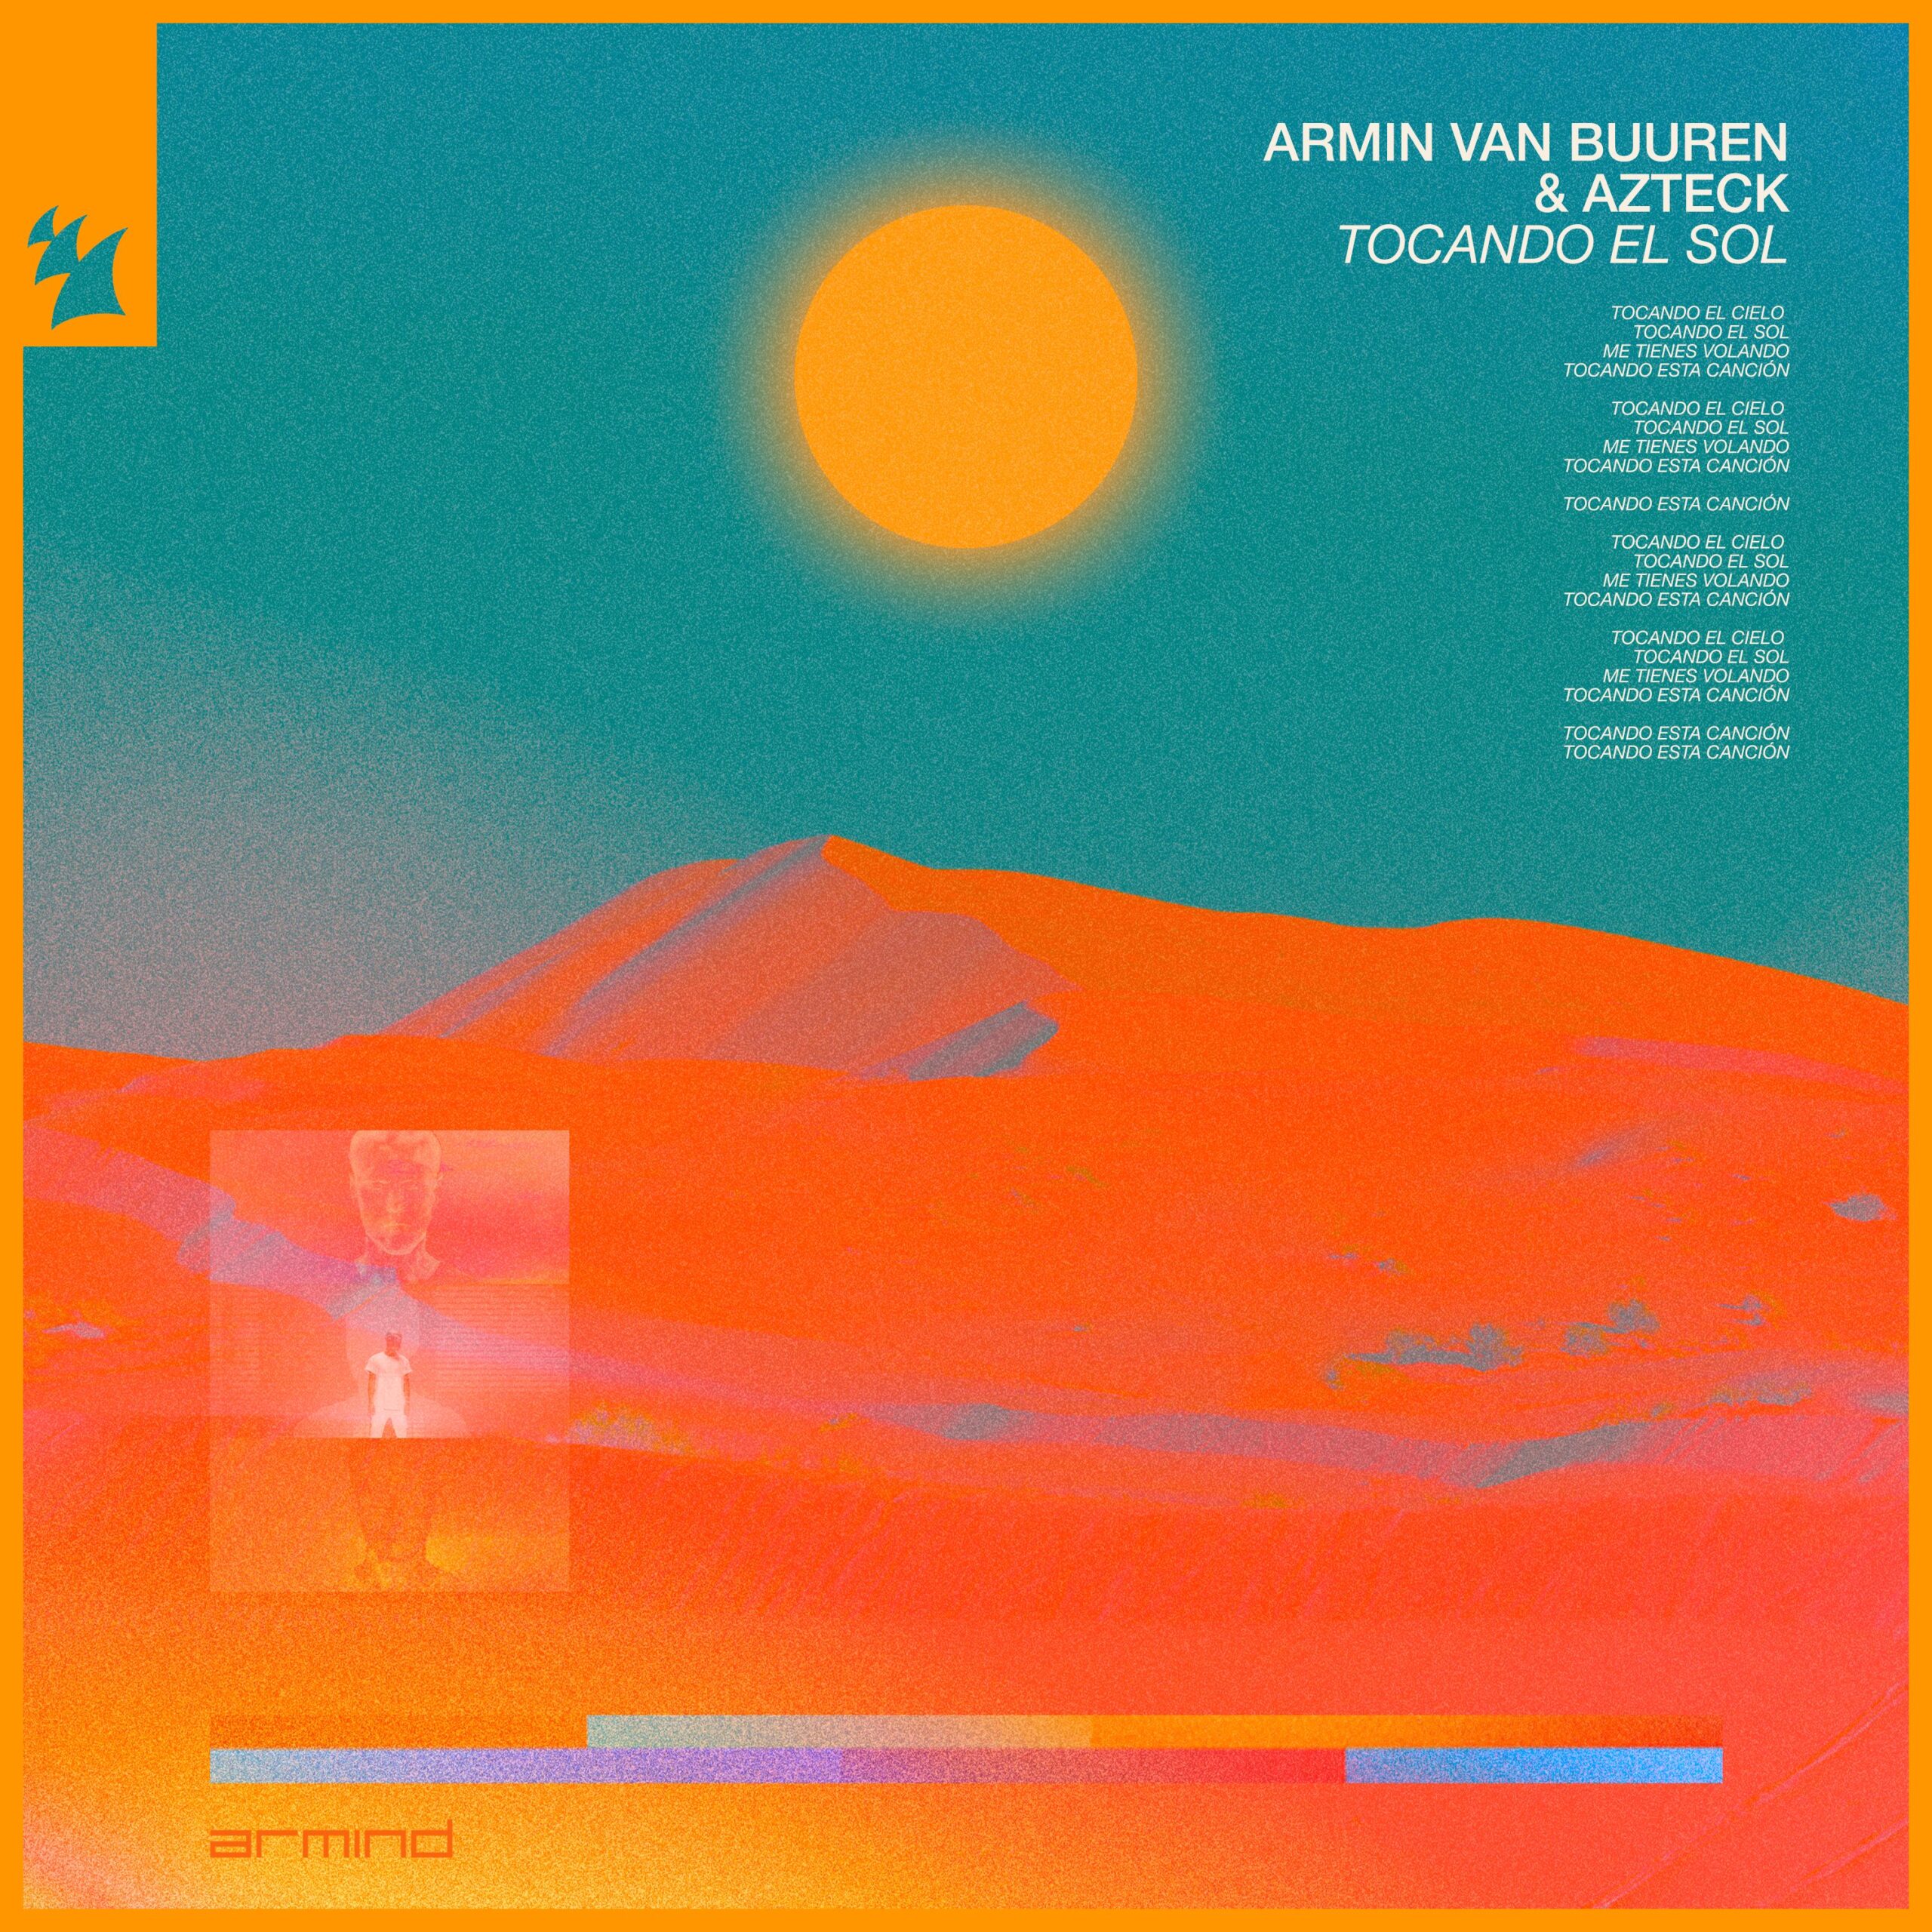 Armin van Buuren and Azteck presents Tocando El Sol on Armind